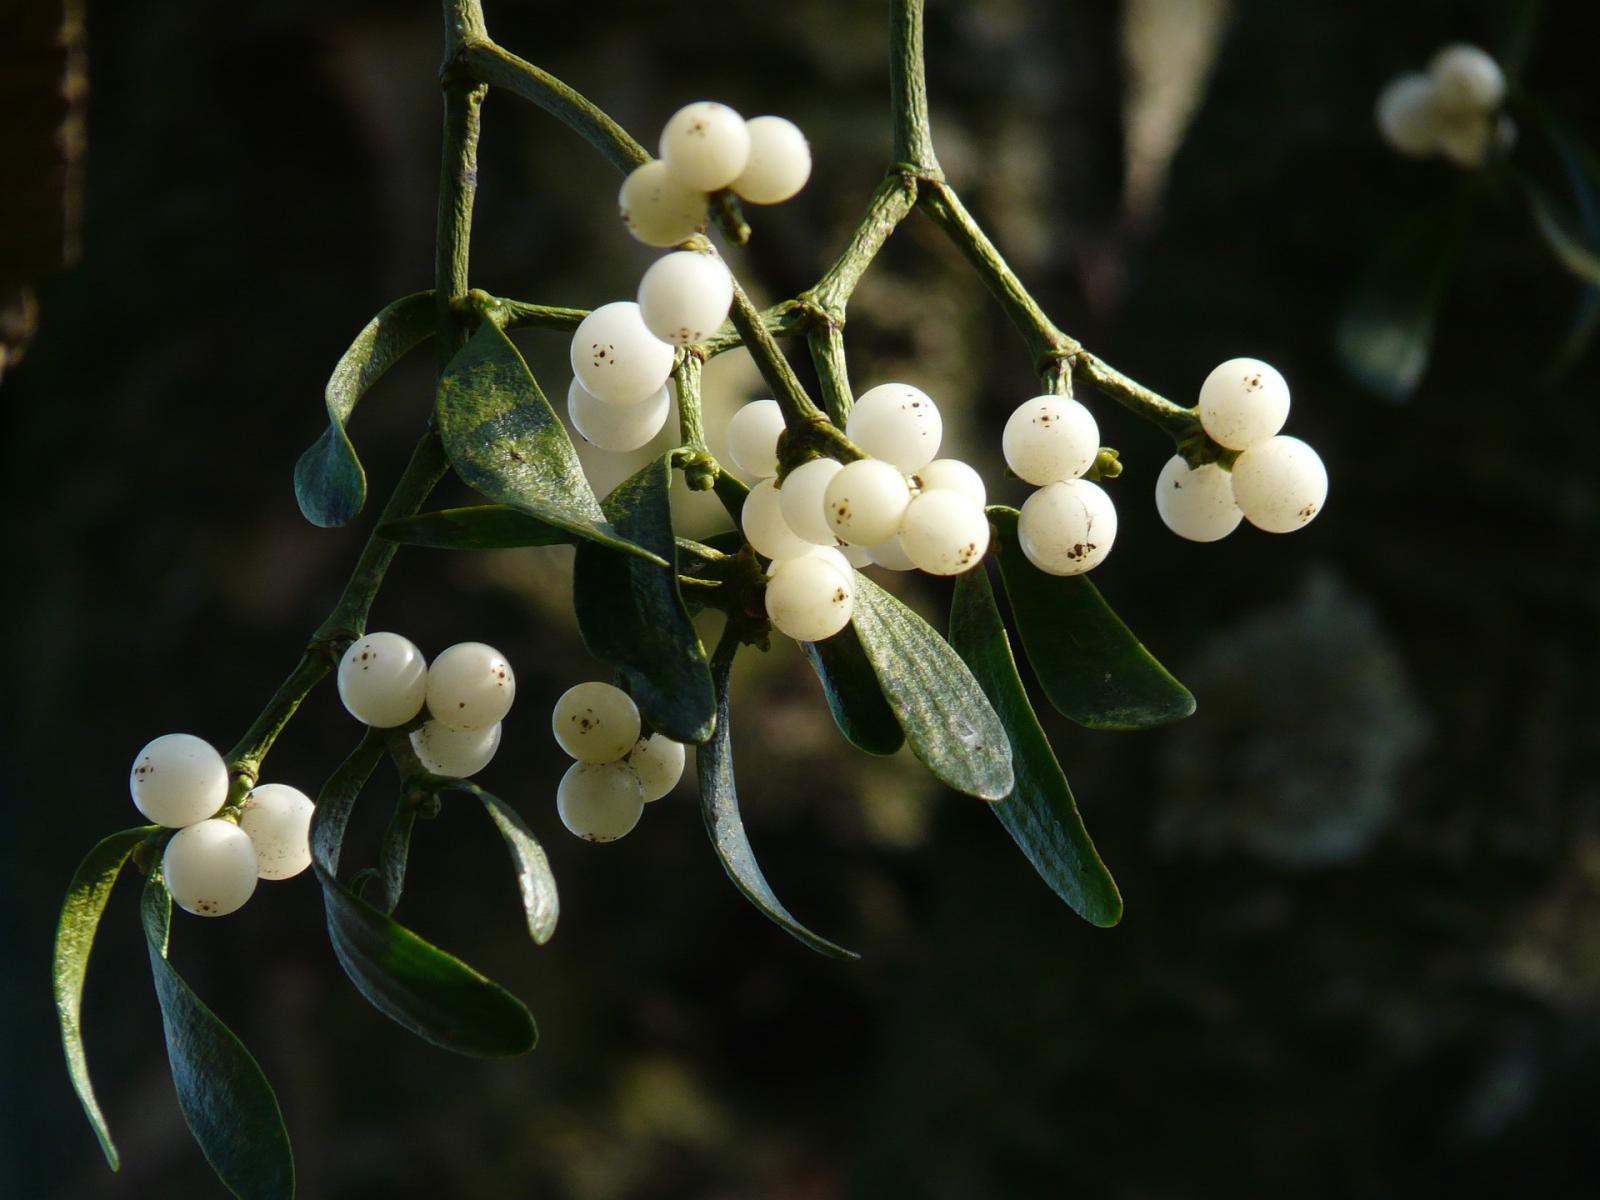 Picture of mistletoe-berries